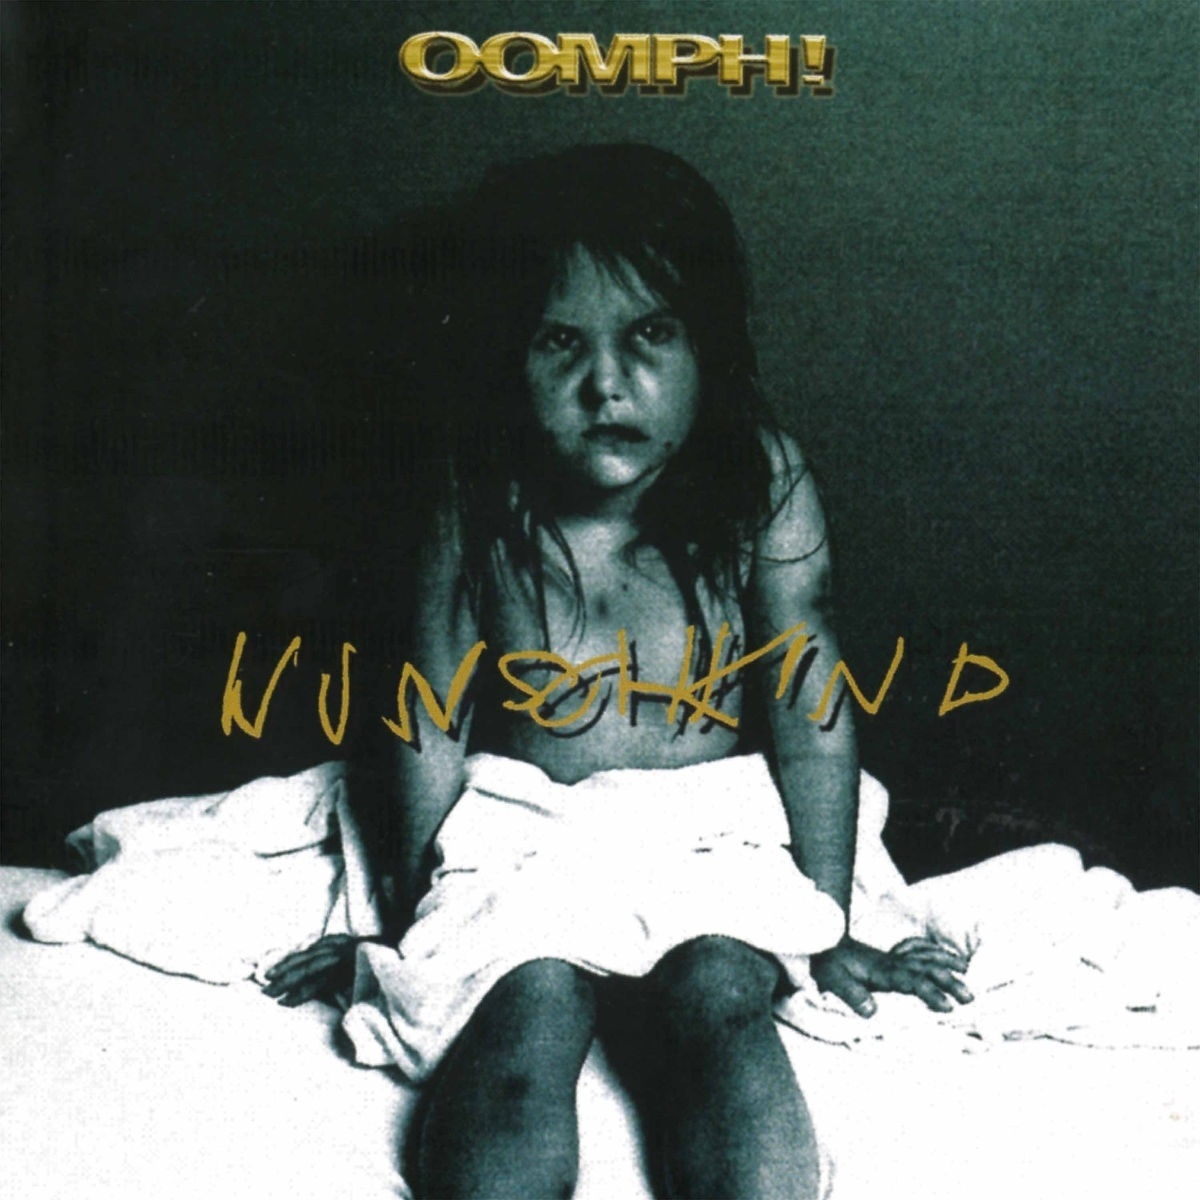 Wunschkind (Re-Release) (Vinyl) - Oomph!. (LP)